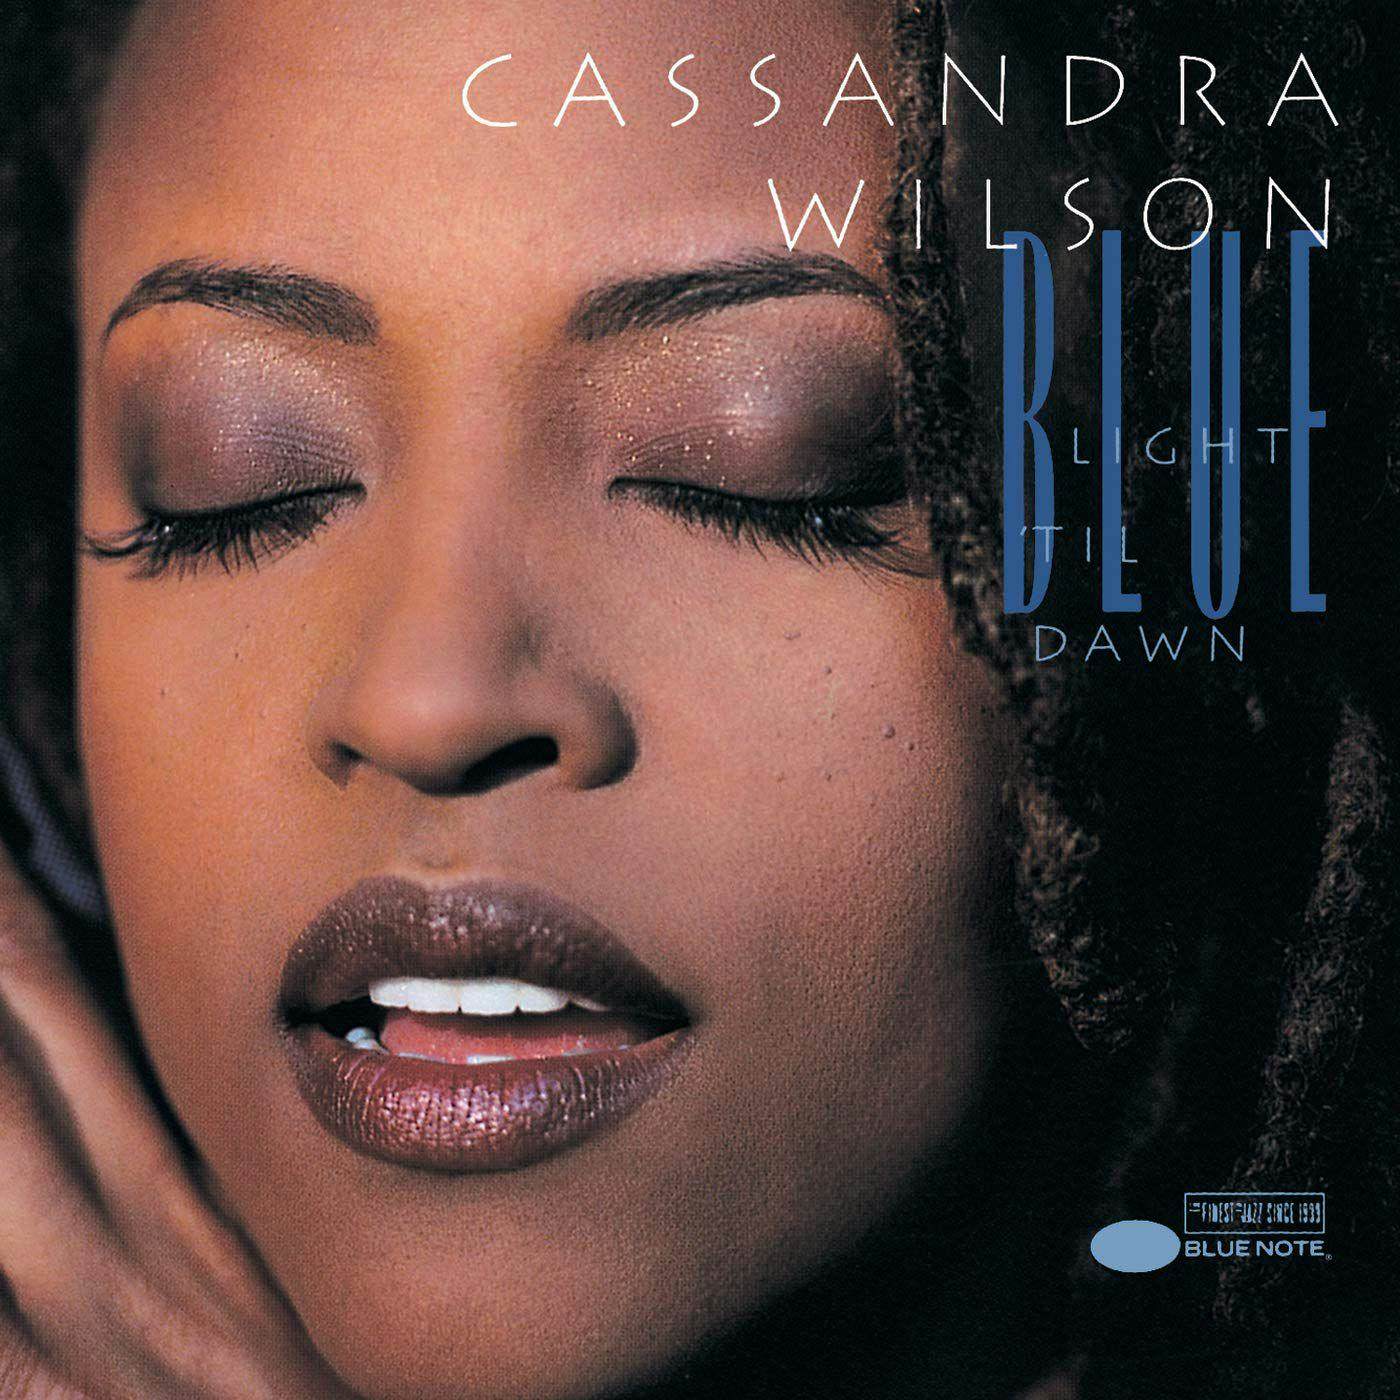 Cassandra Wilson Blue Light 'Til Dawn (Blue Note Classic Series/2LP) Vinyl Record